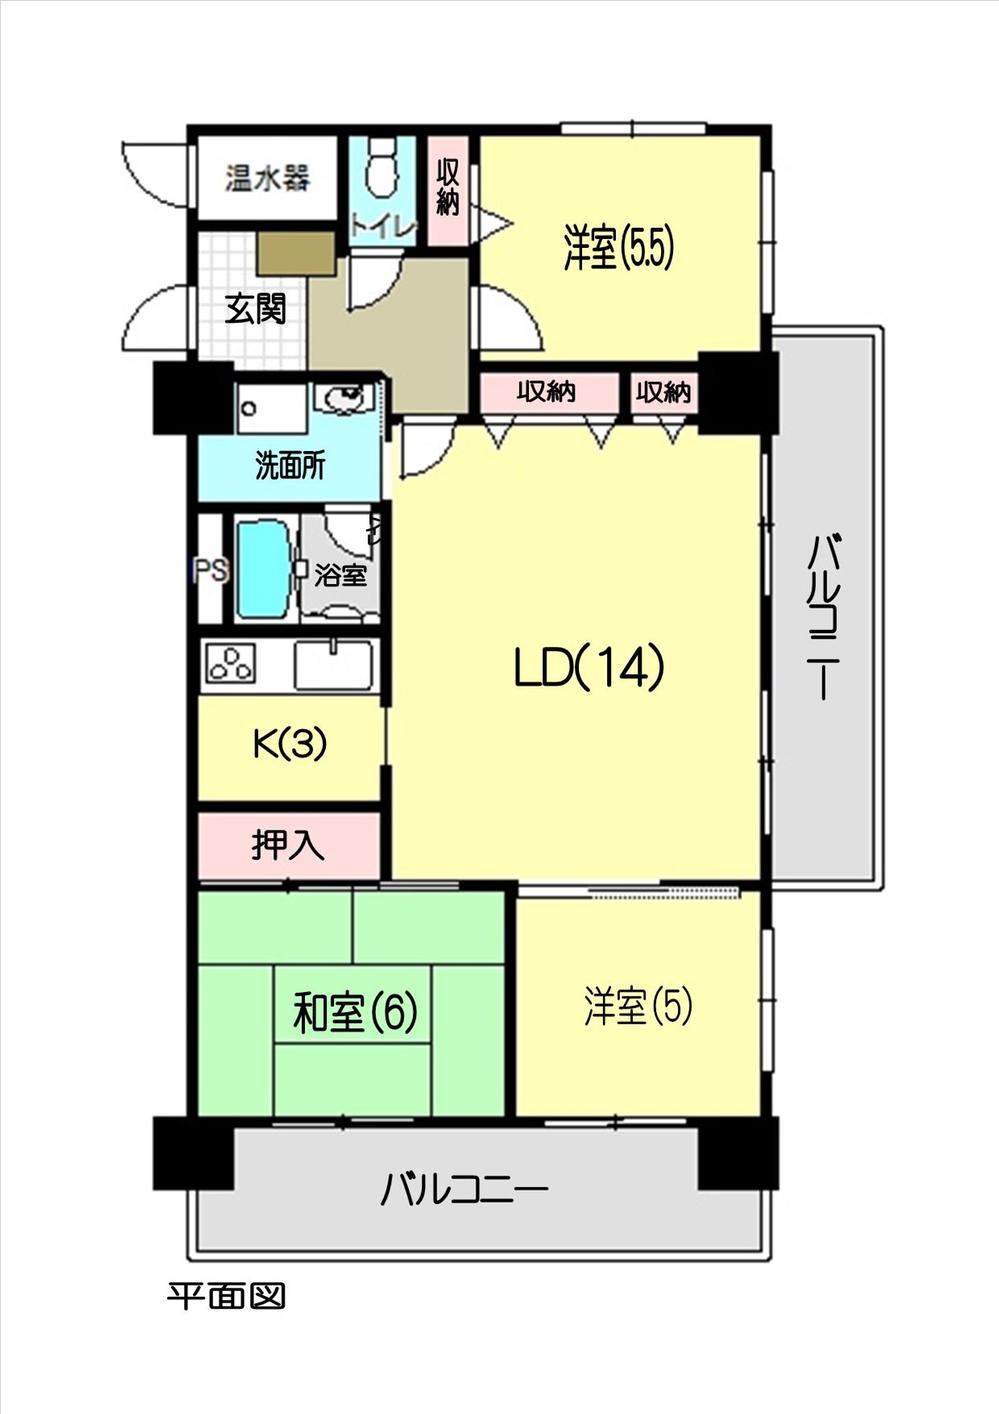 Floor plan. 3LDK, Price 12 million yen, Occupied area 73.45 sq m , Balcony area 17.9 sq m